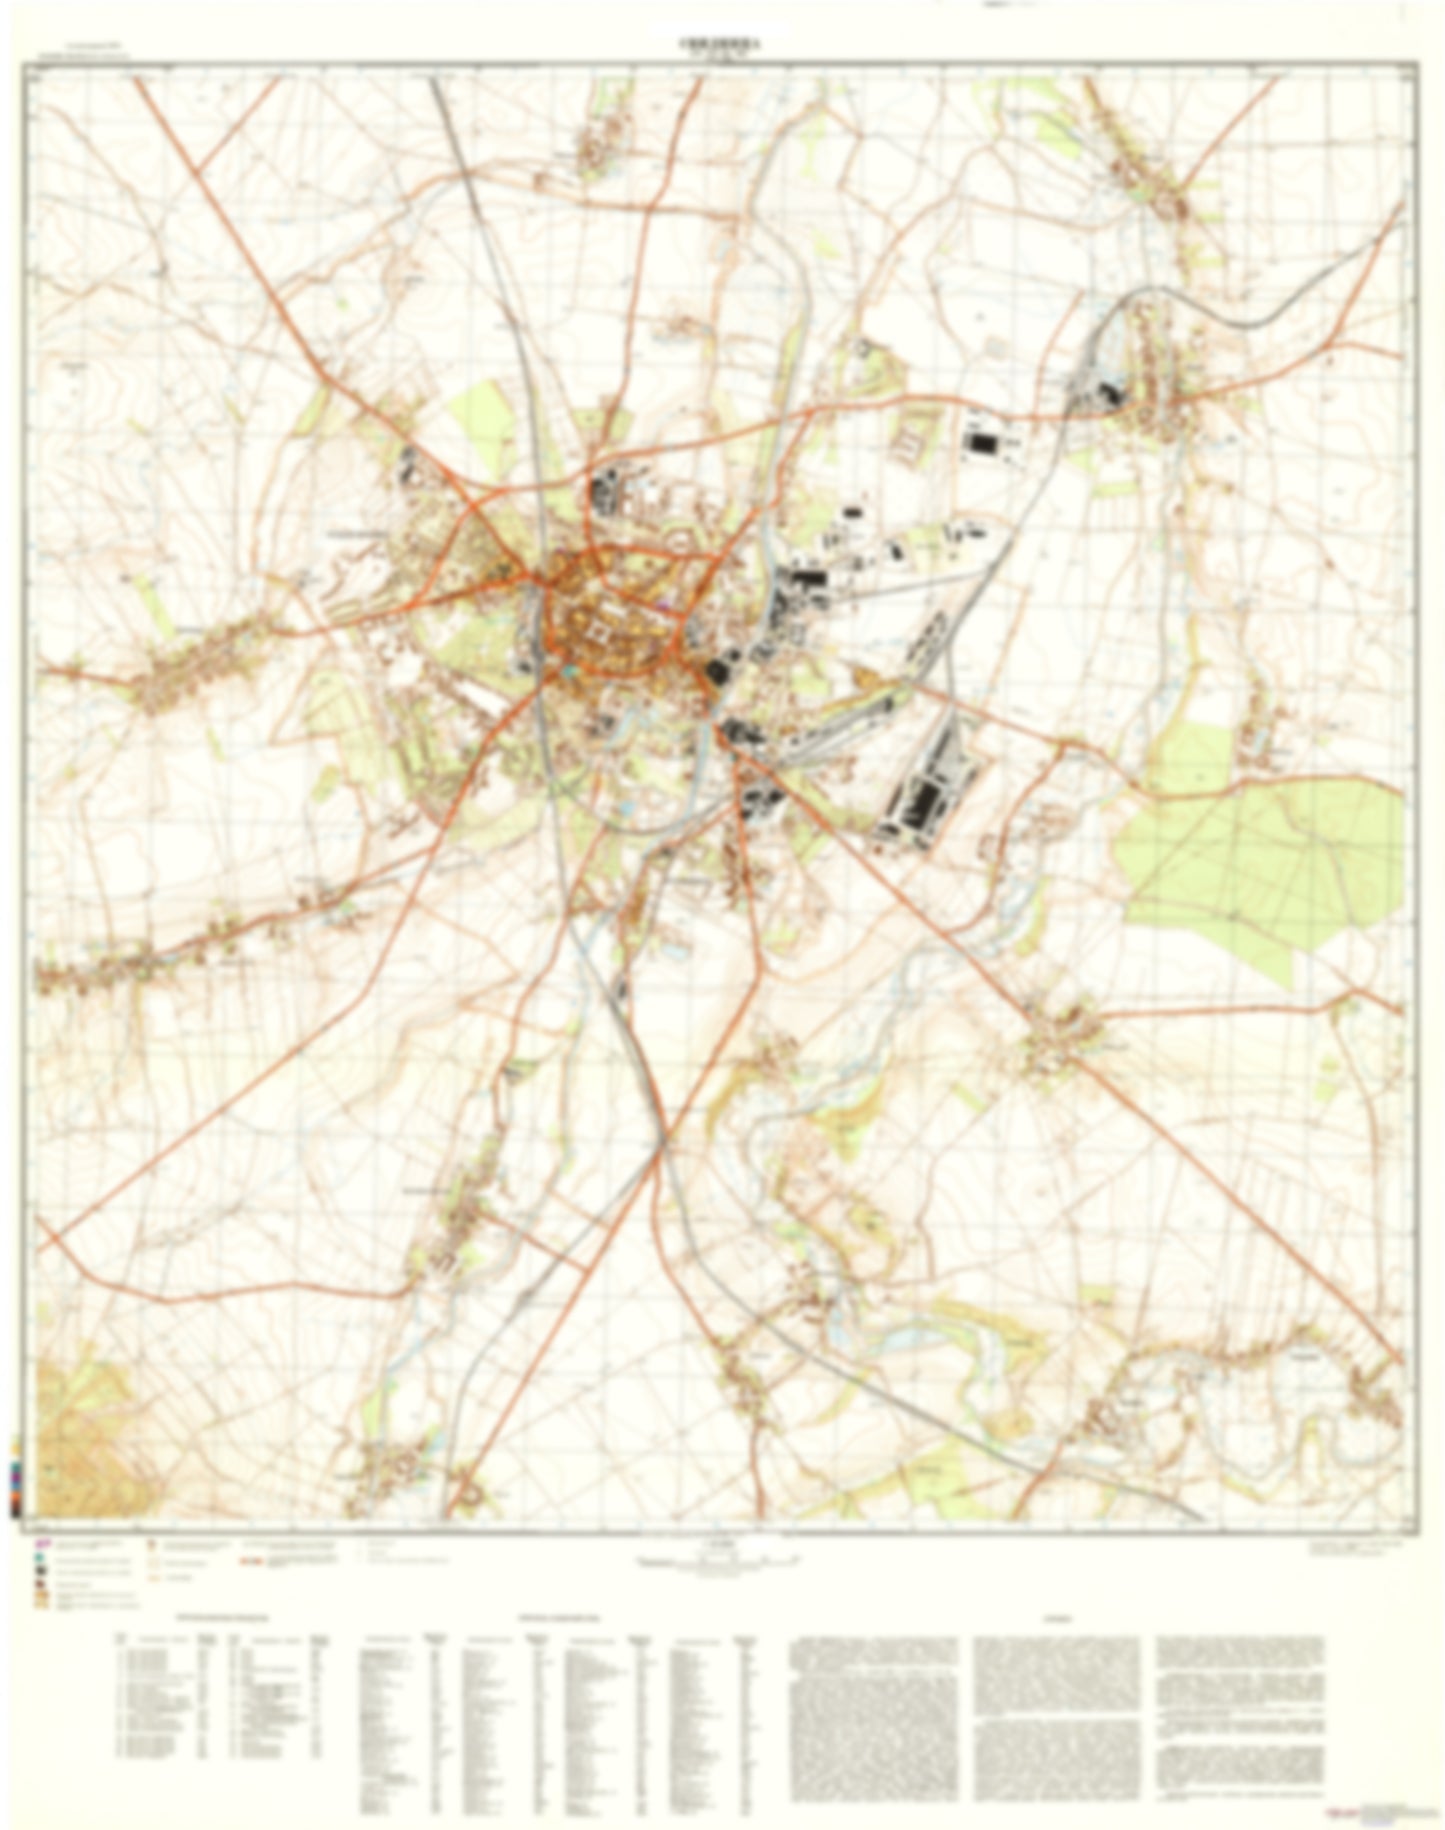 Swidnica (Poland) - Soviet Military City Plans